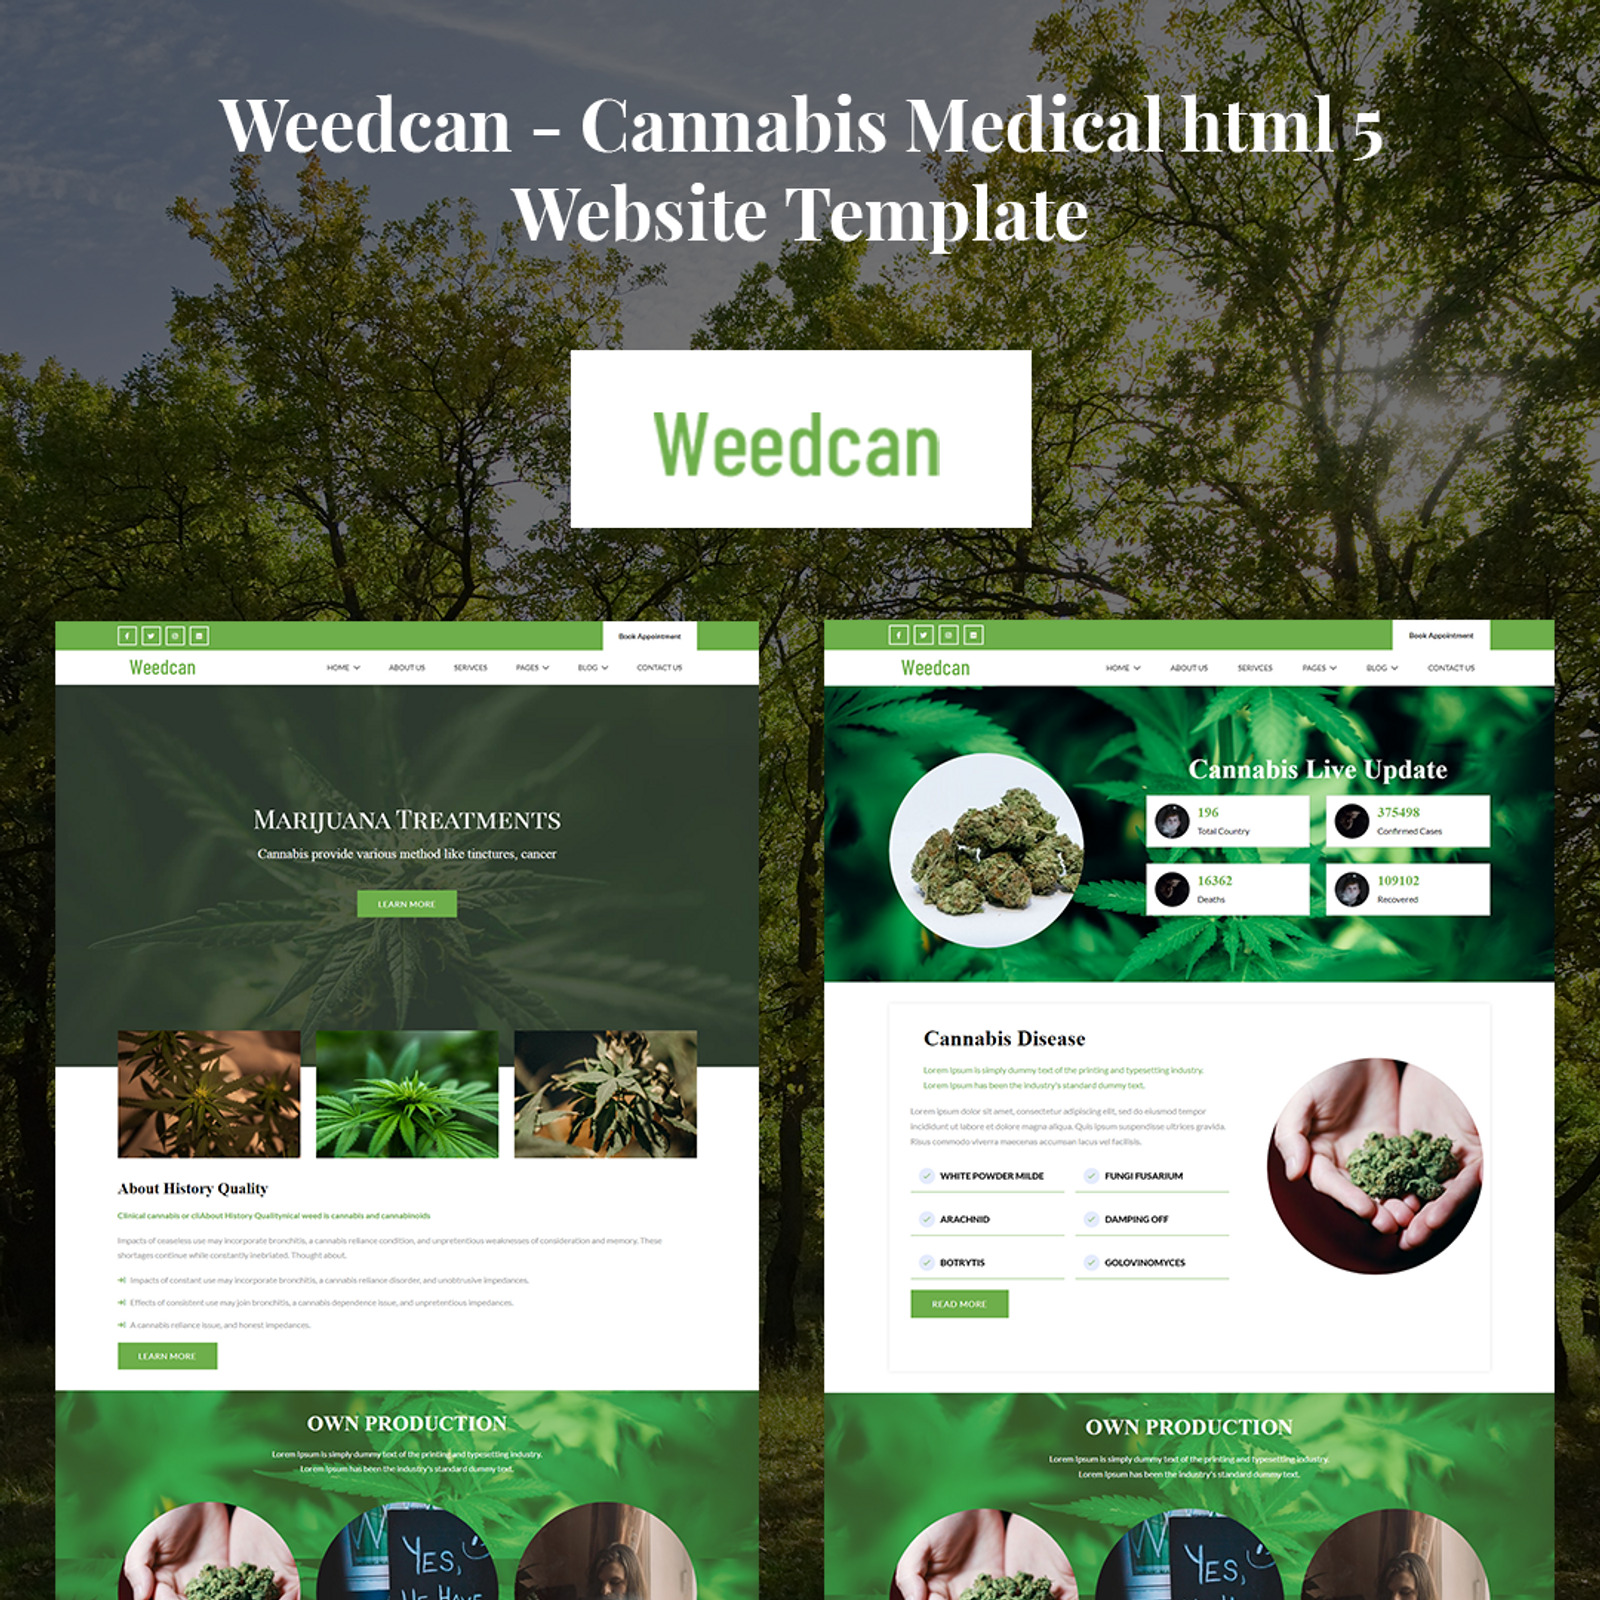 Weedcan Cannabis Medical html 5 Website Template